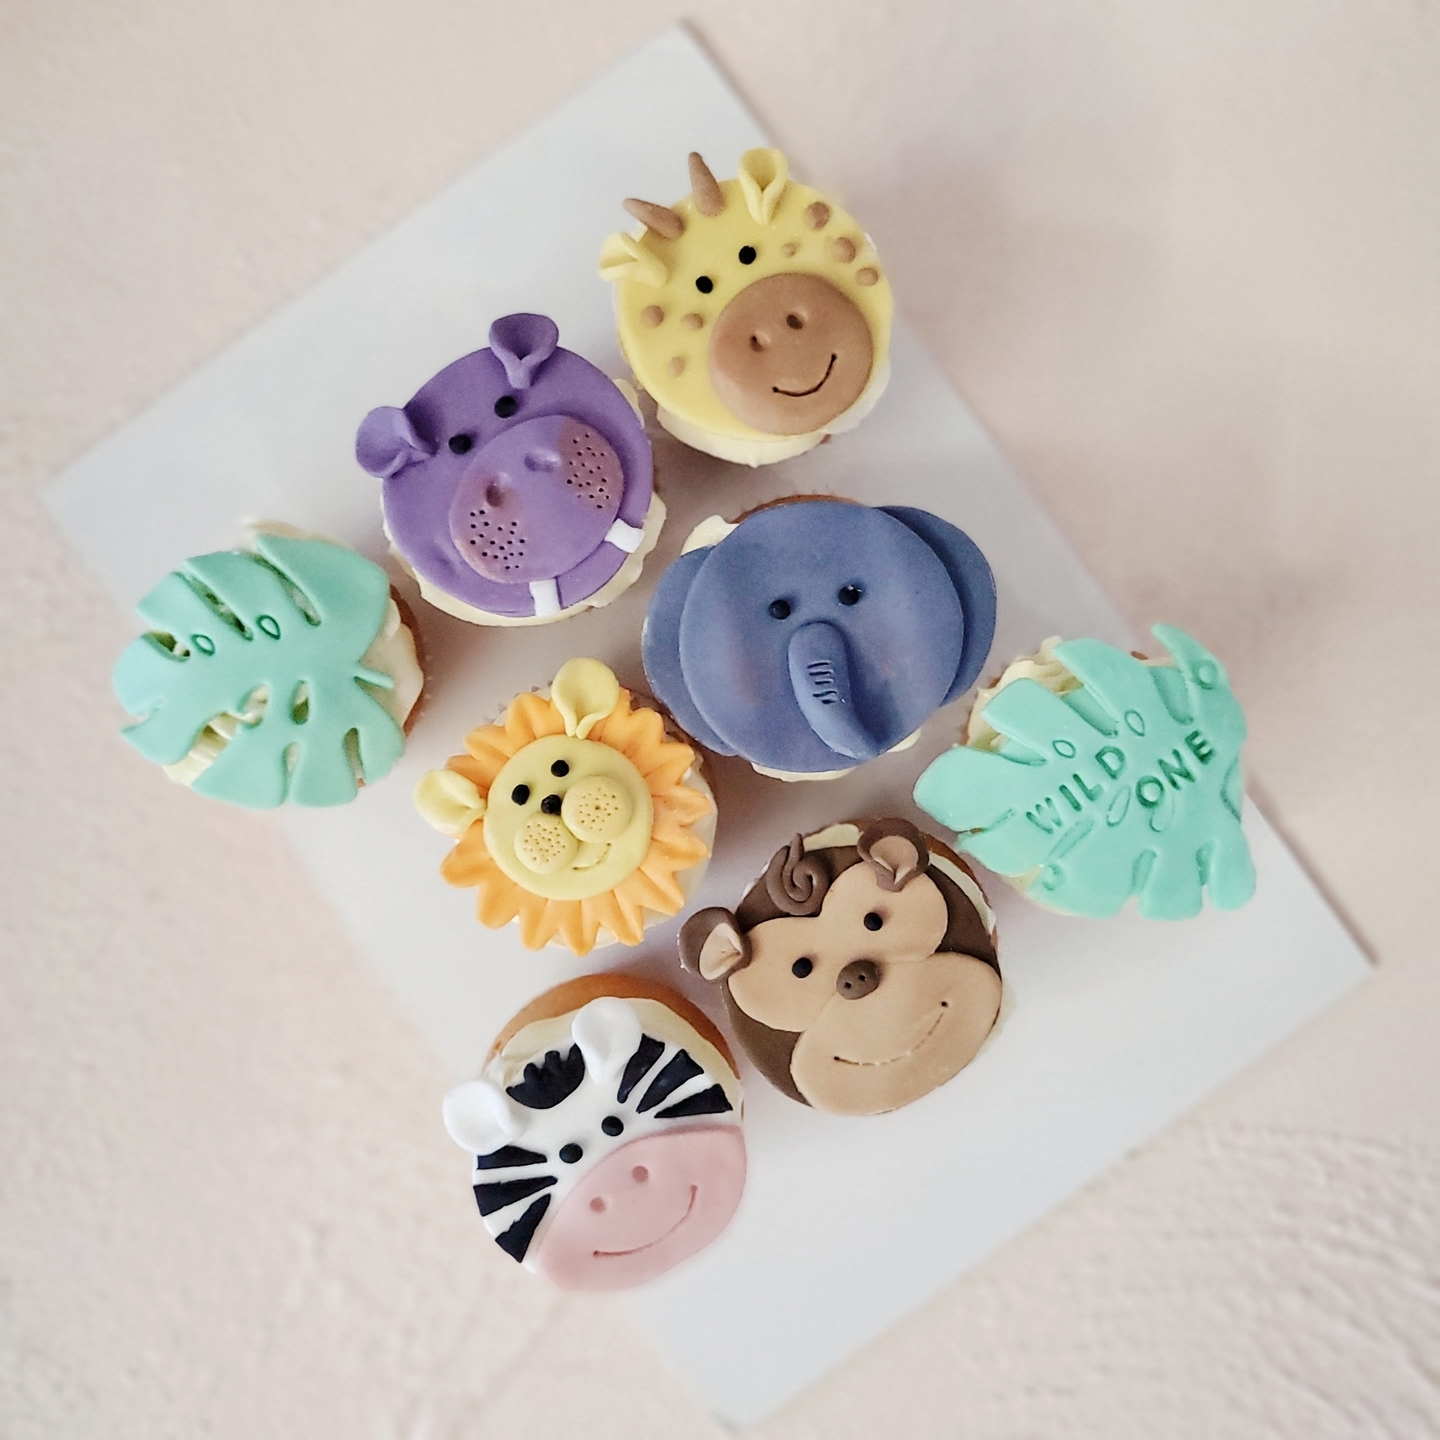 Safari Themed Cupcakes